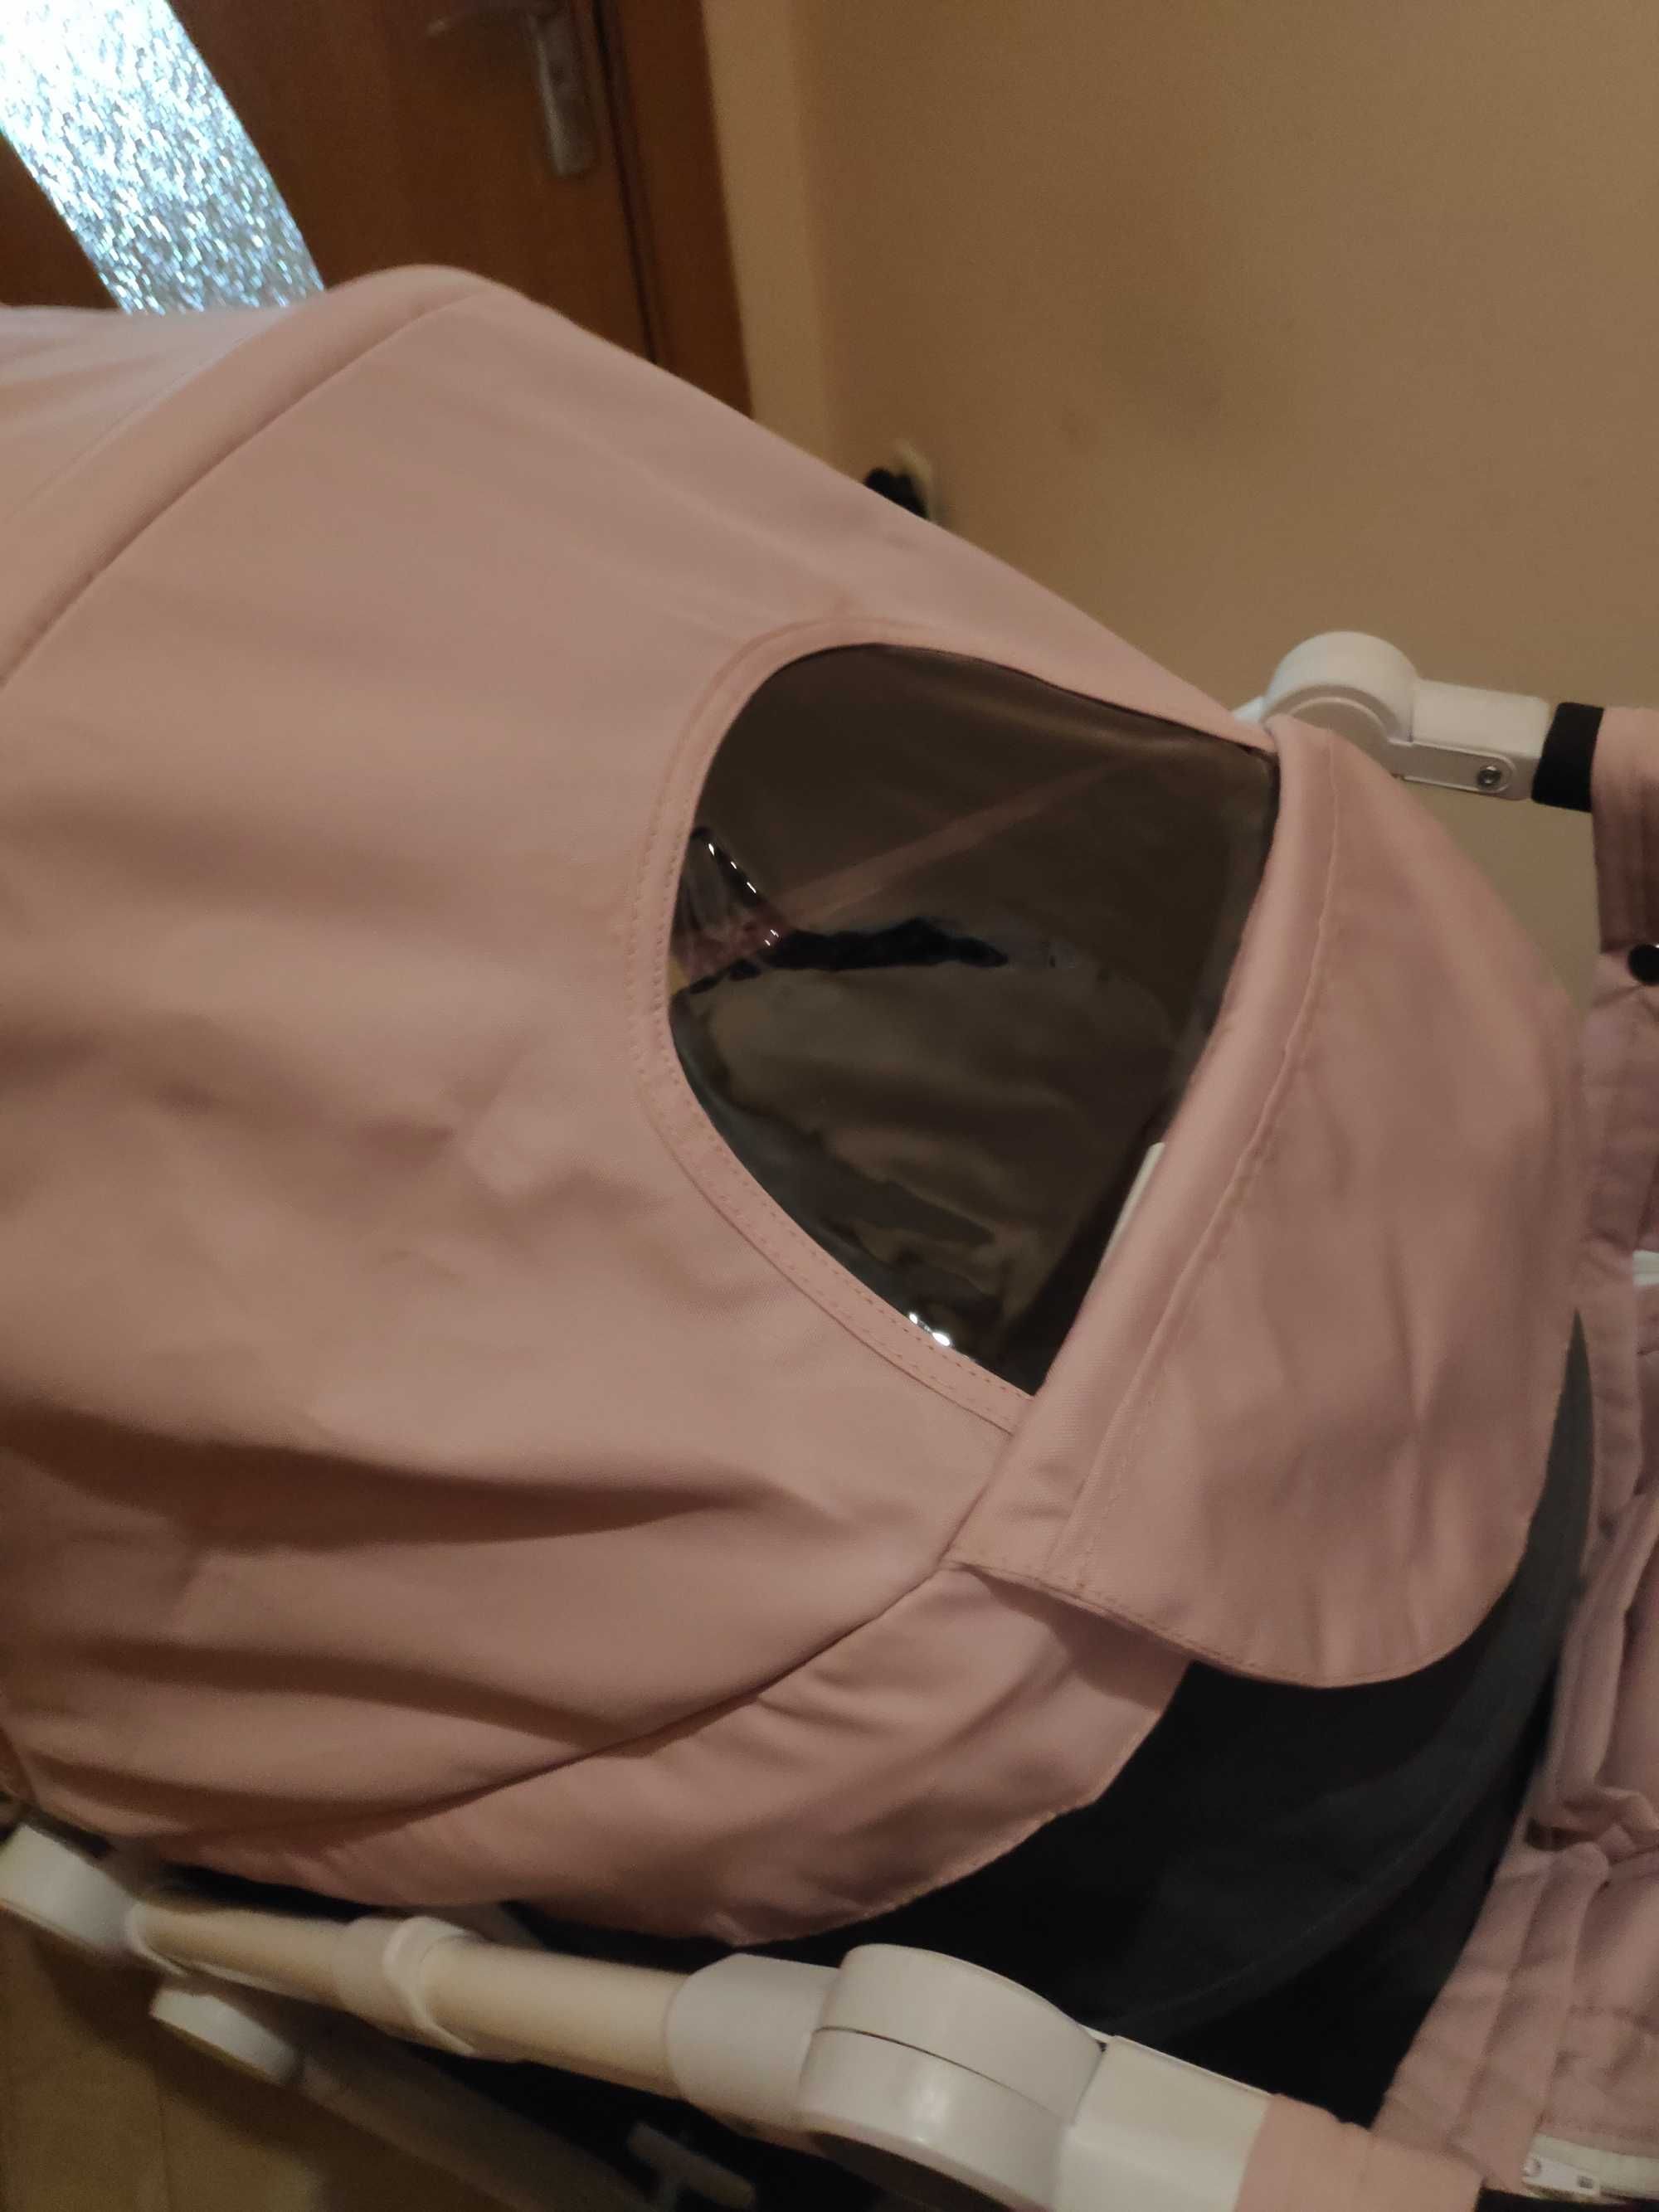 Детска количка Kikkaboo UGO 3 в 1, розово-сиво